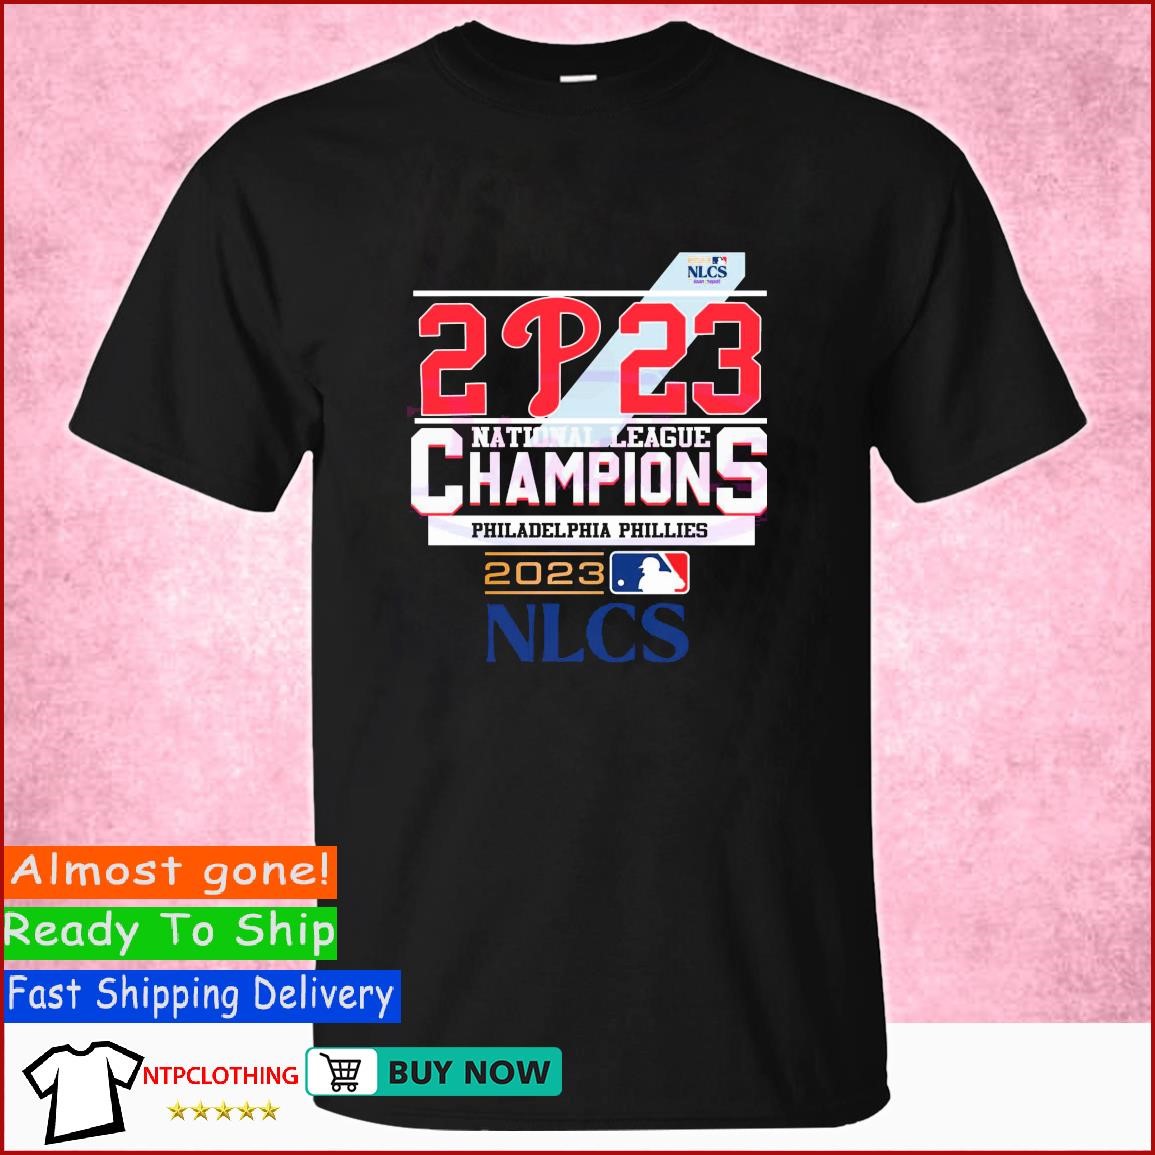 Philadelphia phillies national league champions Shirt - Teefefe